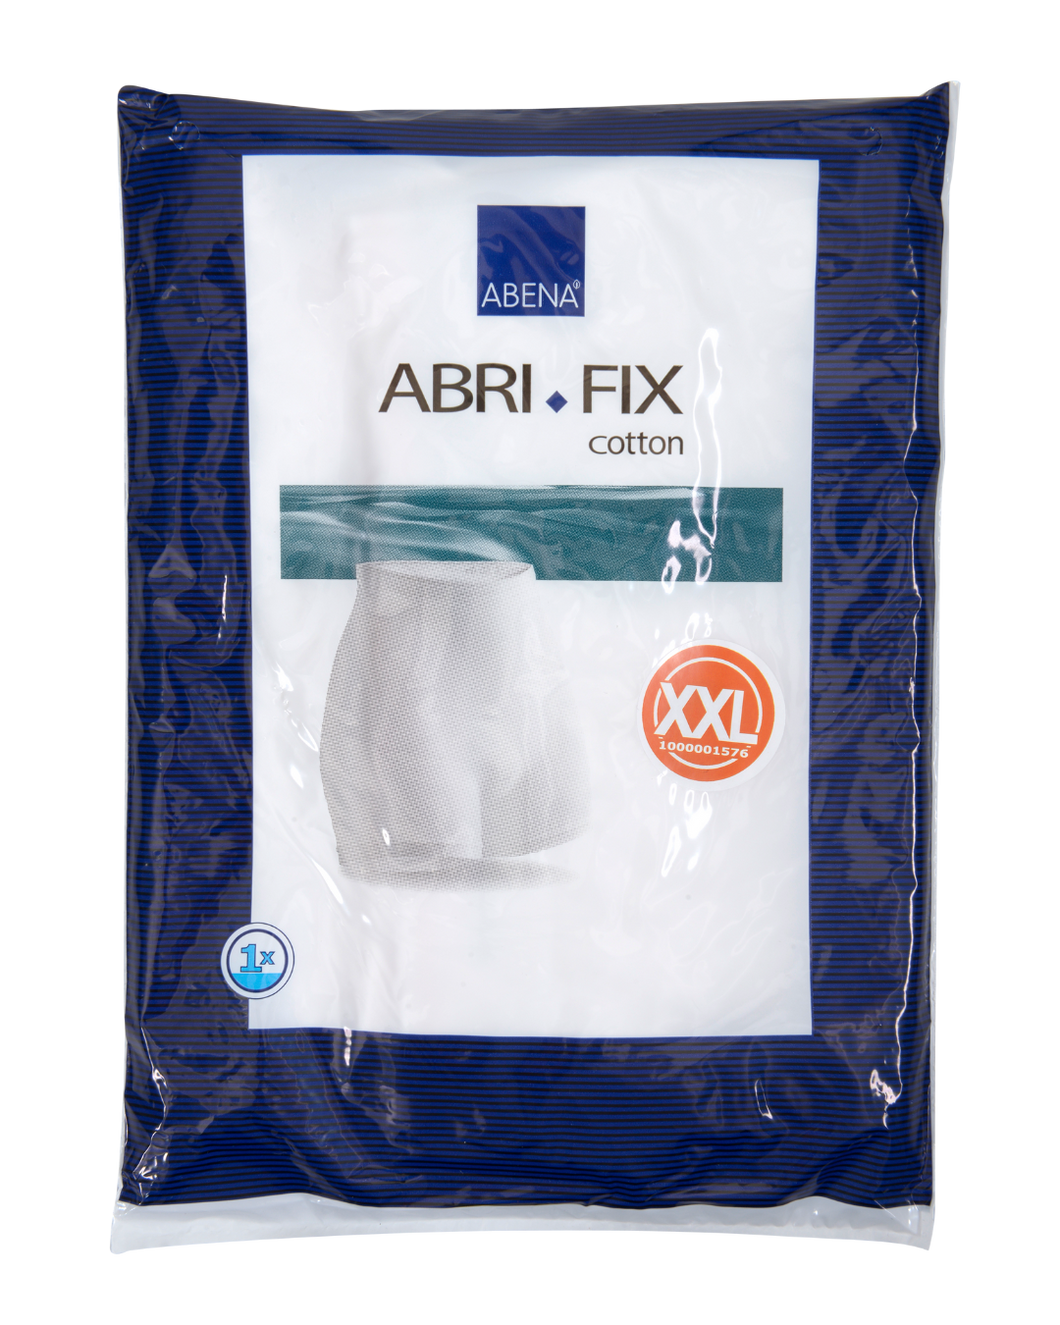 Abri-Fix Cotton with Legs - XX-Large